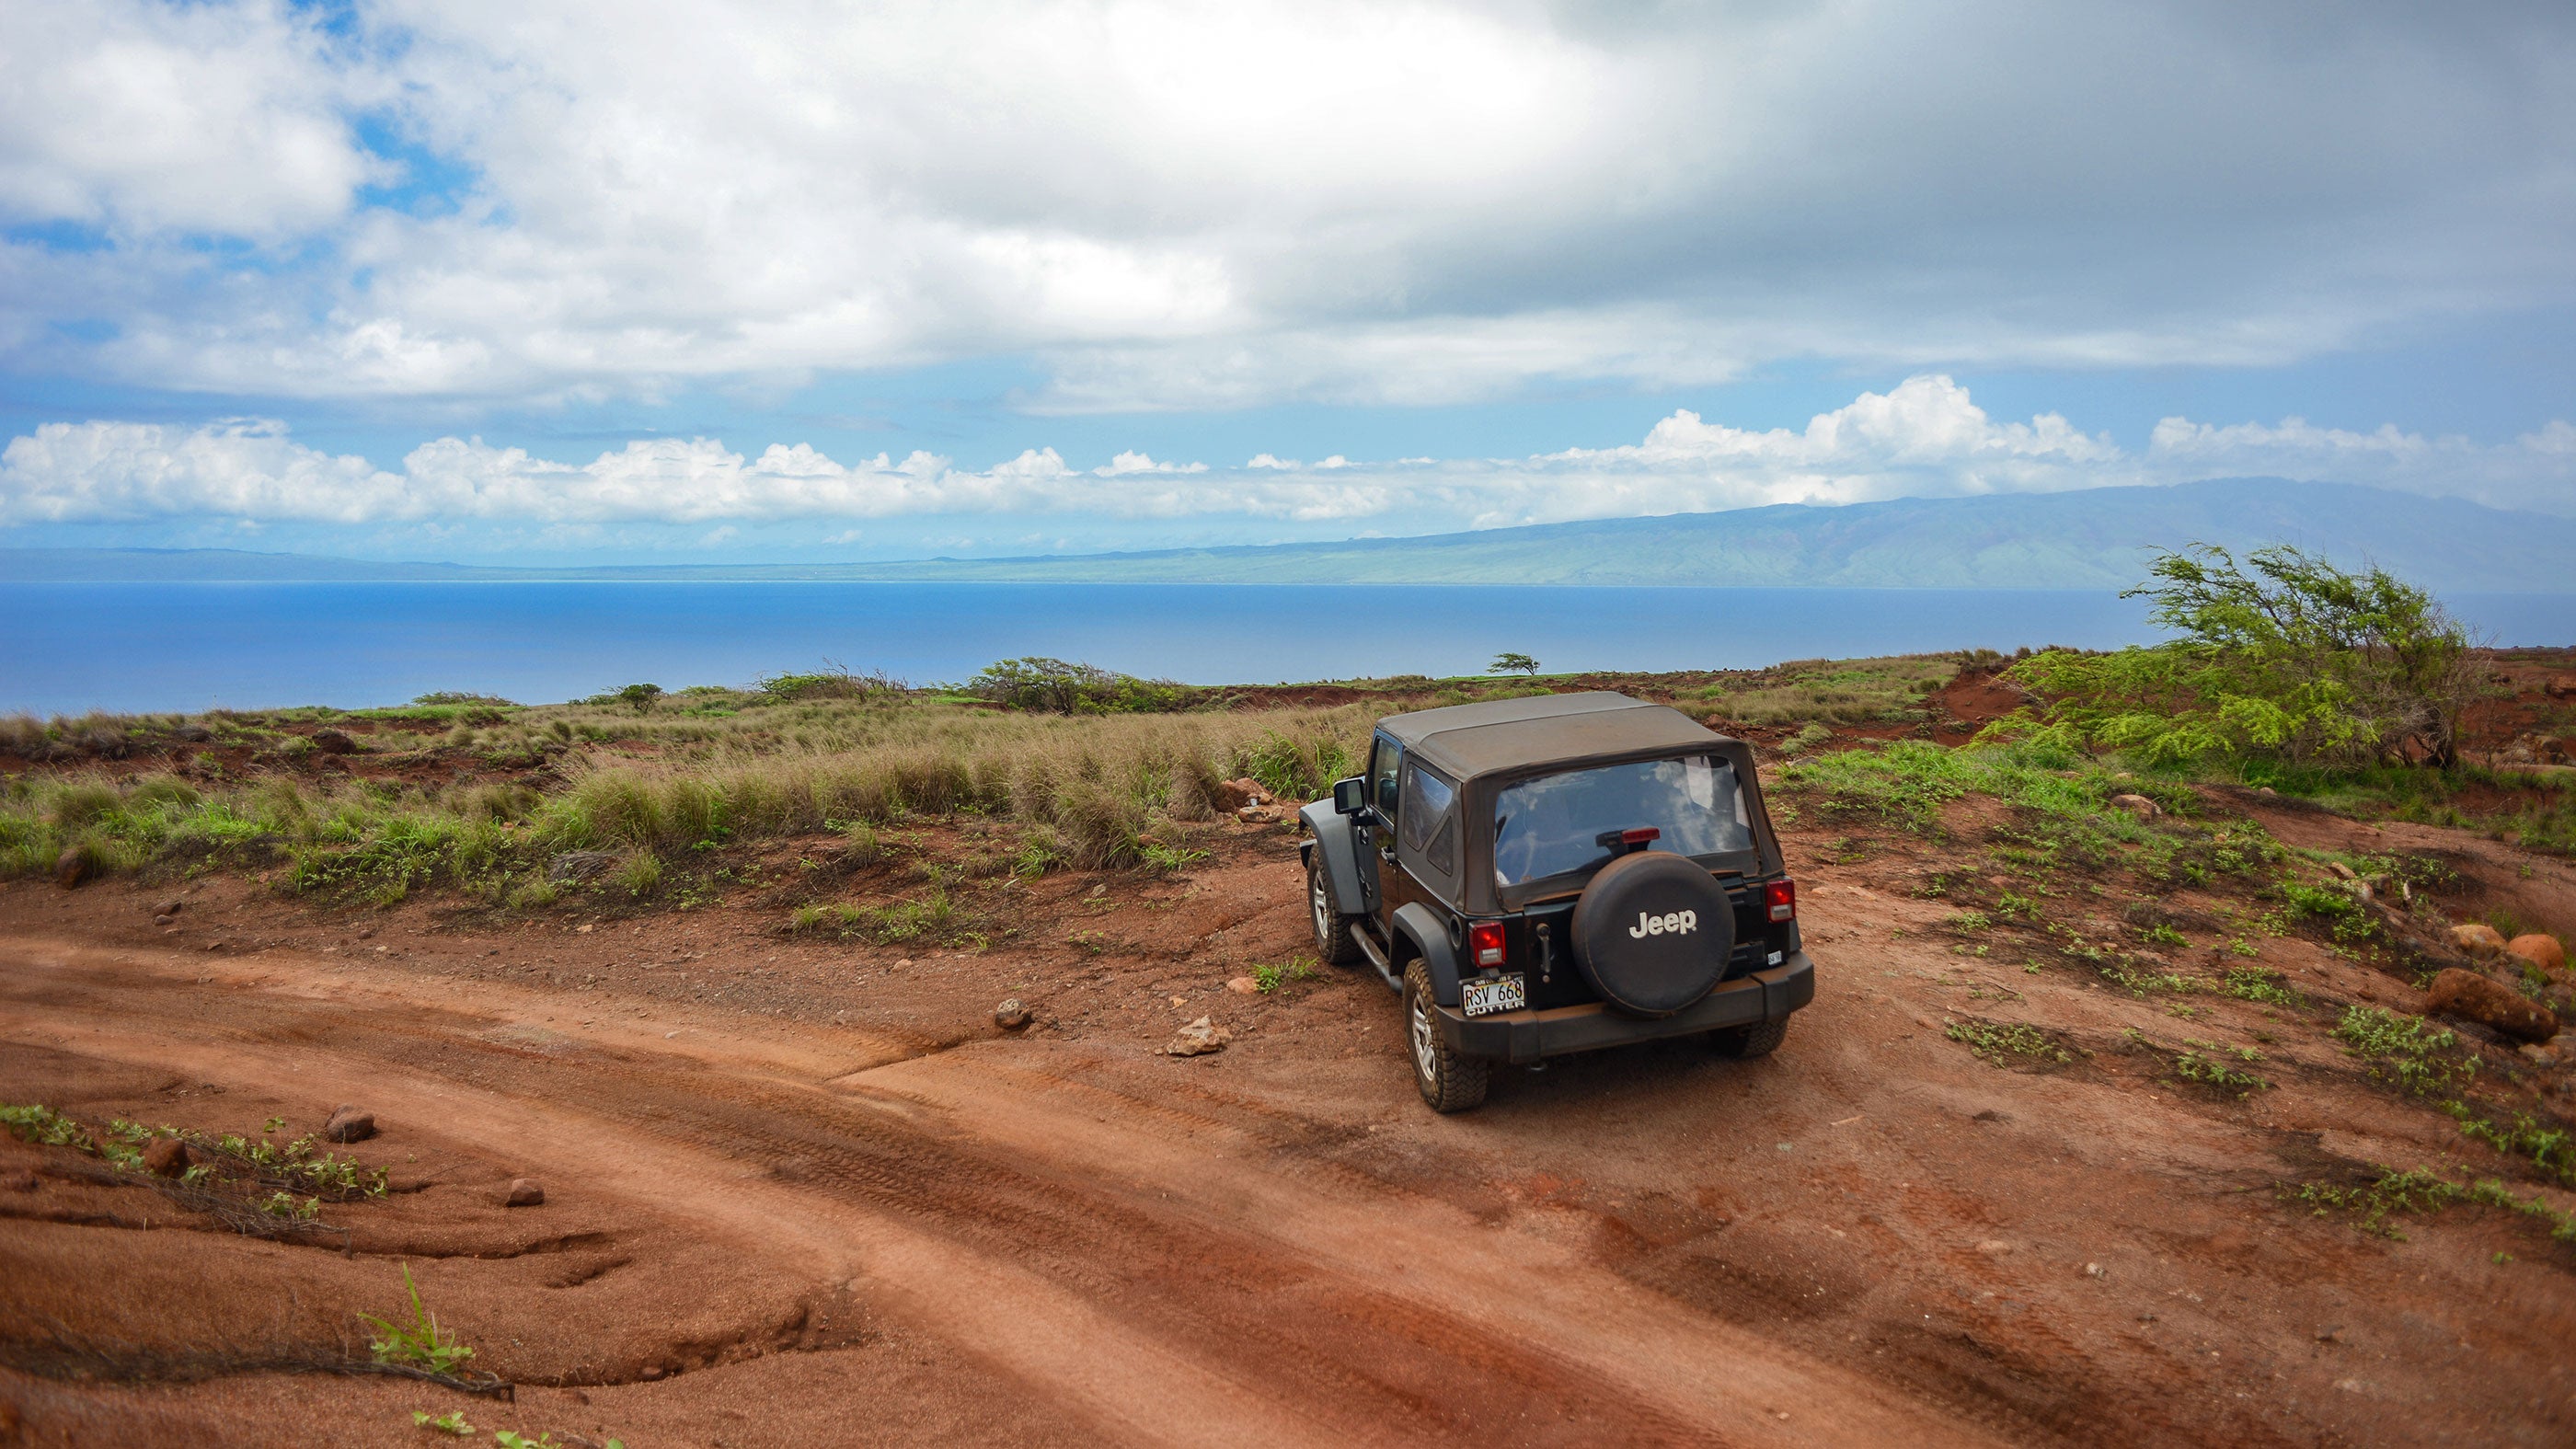 lanai-hawaii-off-road-vehicle-car-jeep-island-beach-hero-16-9